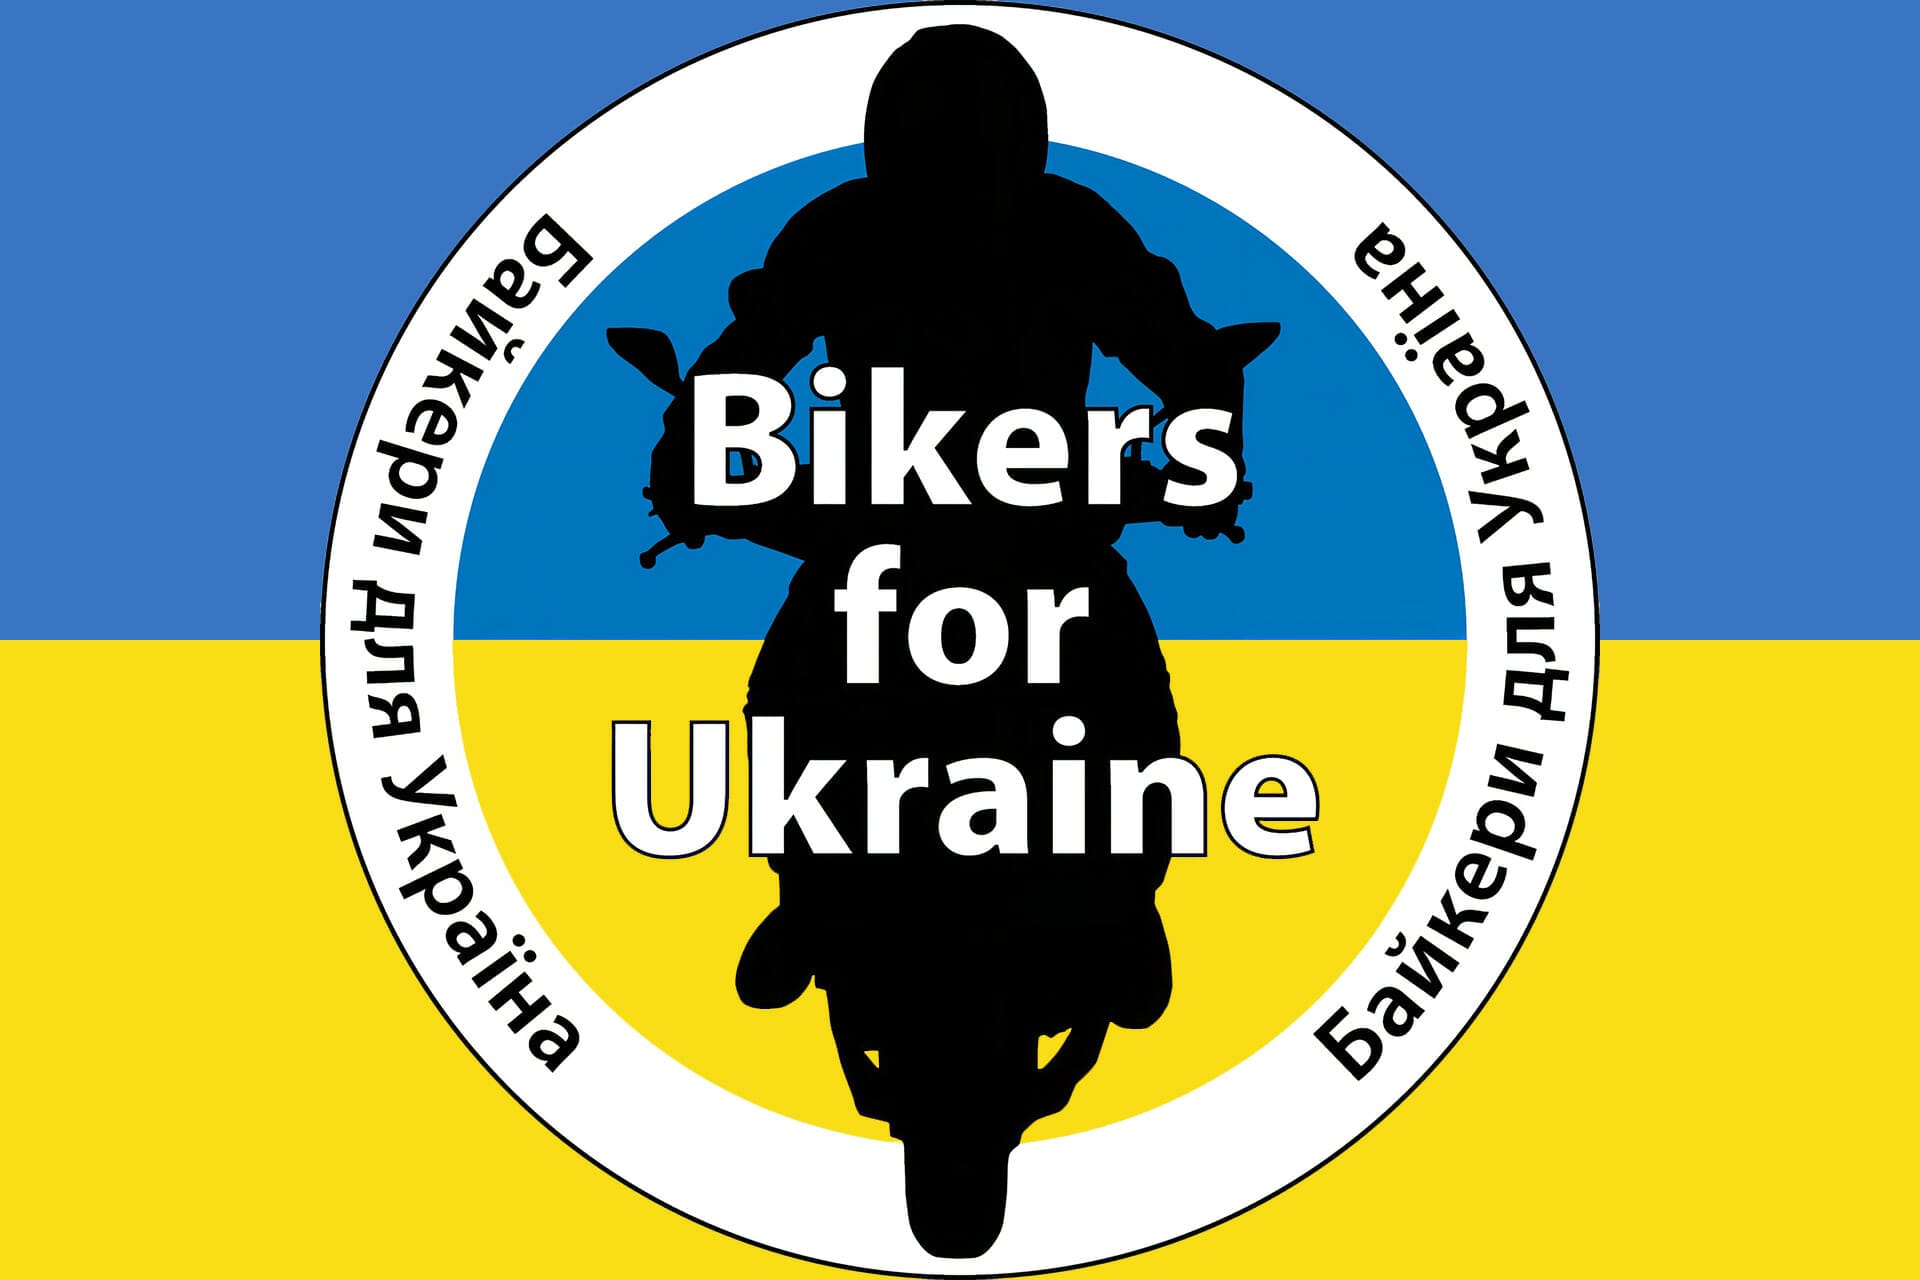 Bikers for Ukraine
- also in the MOTORCYCLES.NEWS APP